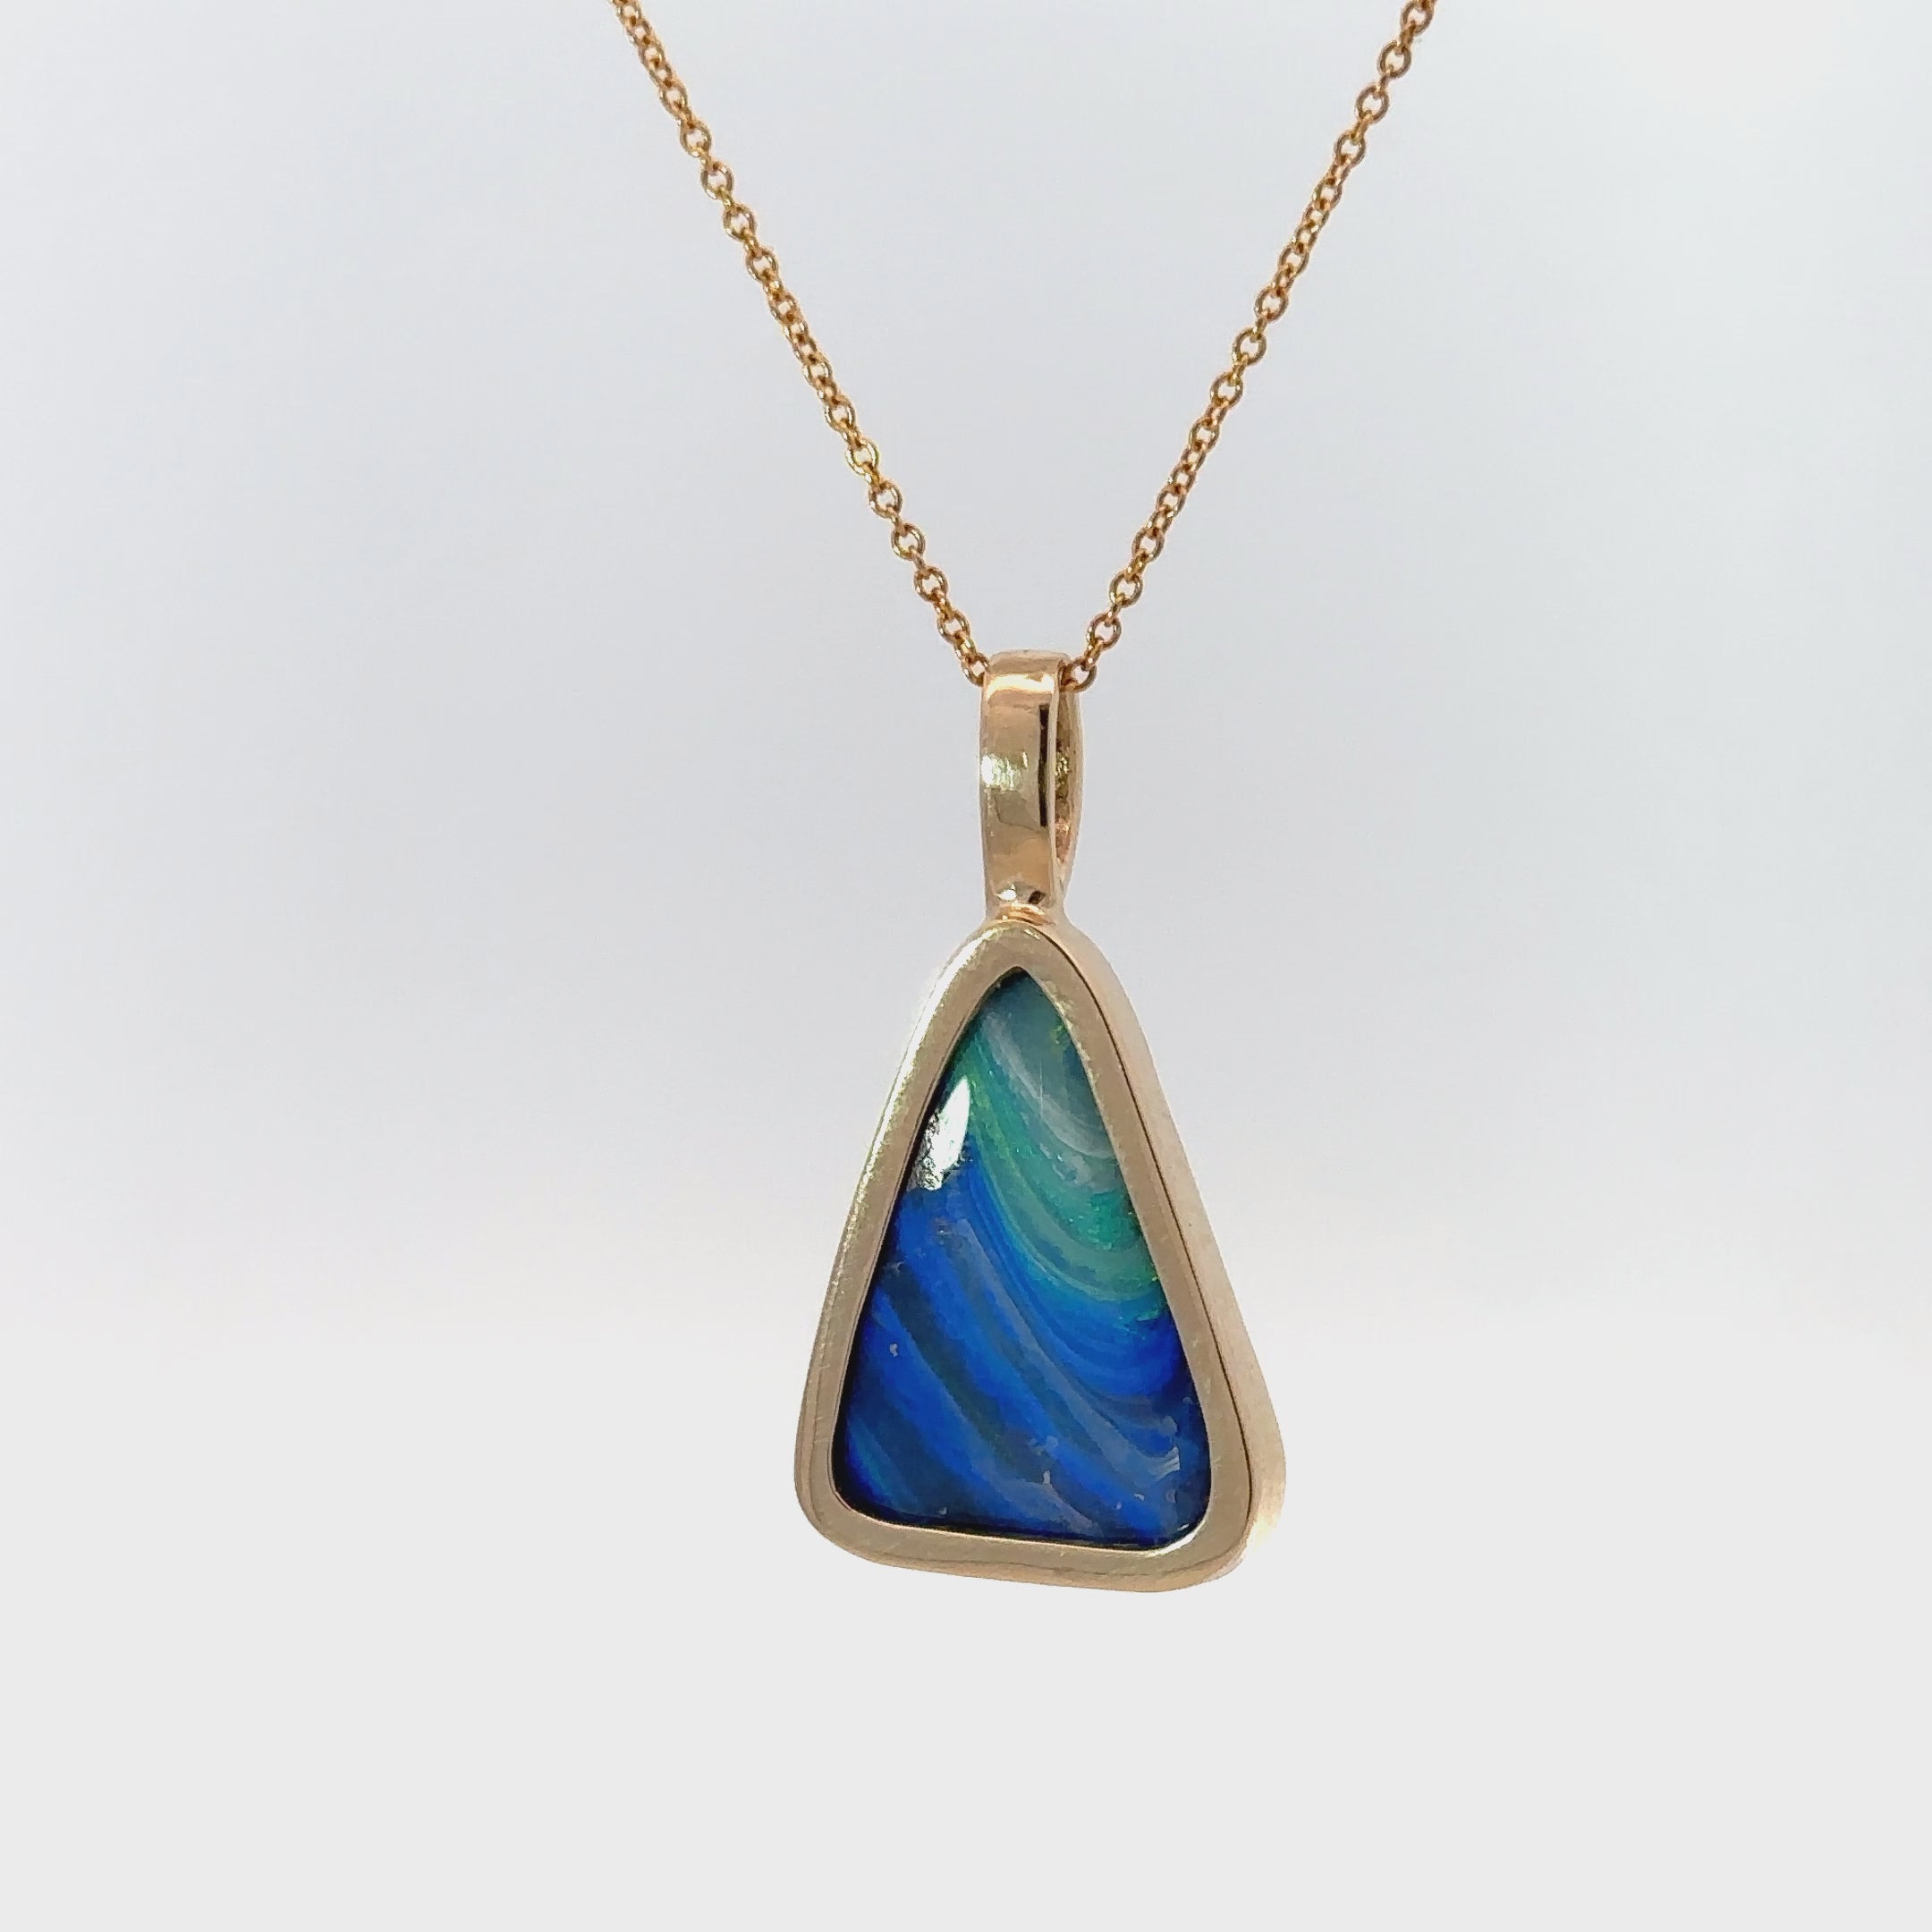 Custom boulder opal pendant